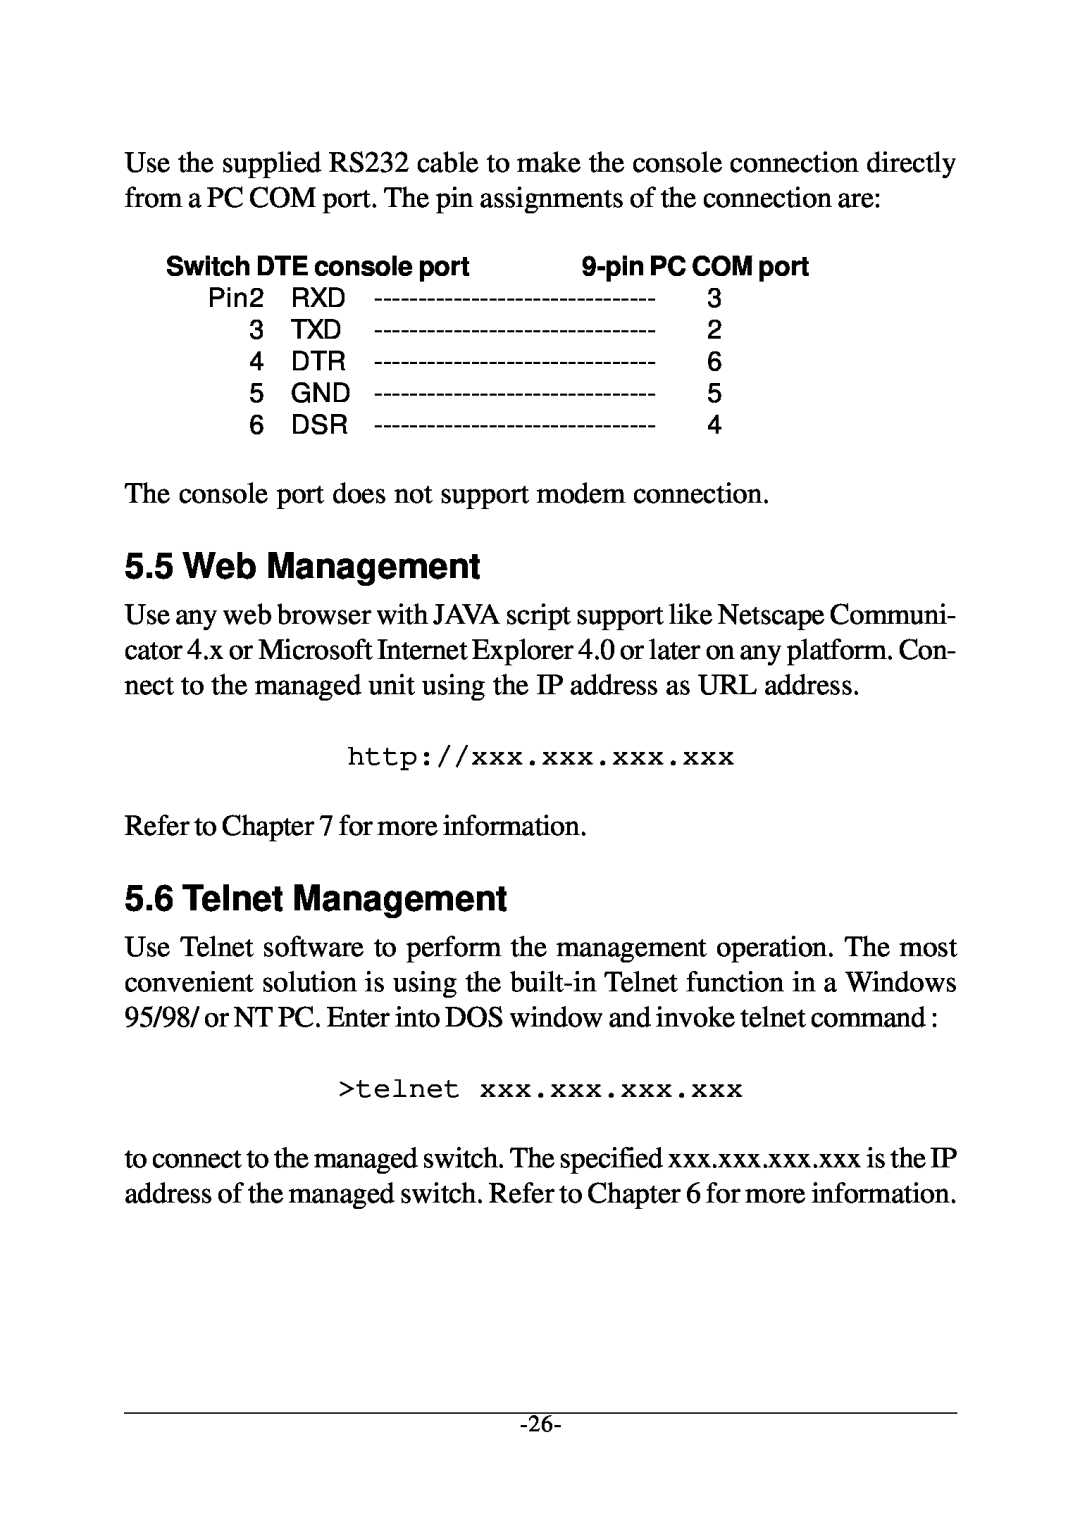 Xerox KS-801 operation manual Web Management, Telnet Management, http//xxx.xxx.xxx.xxx, telnet 